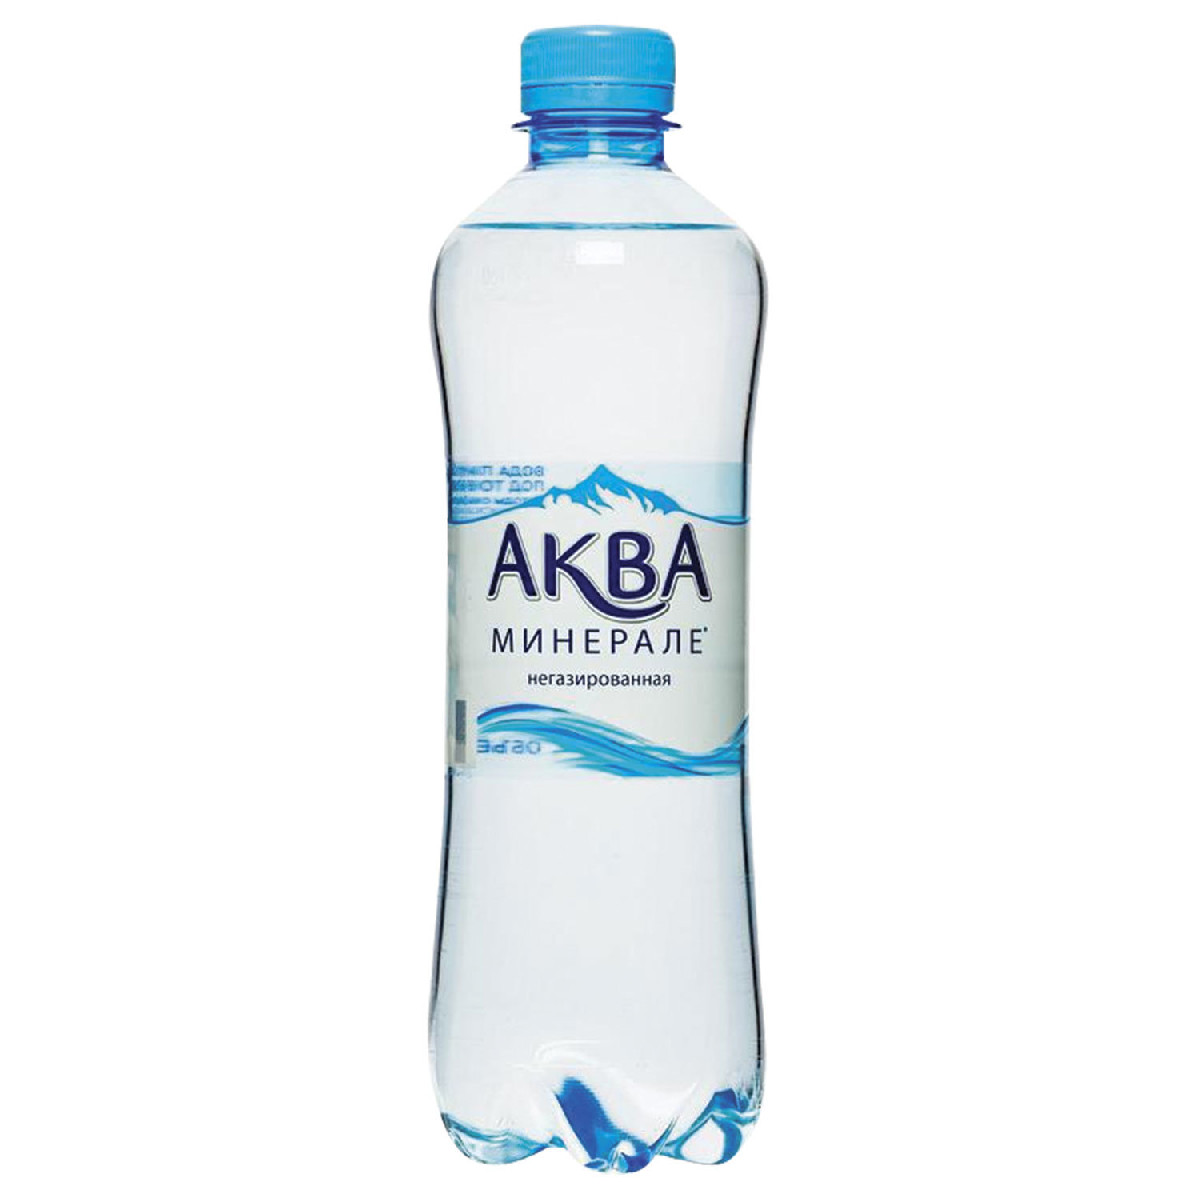 Вода питьевая 0 5 л. Aqua minerale вода питьевая негазированная, 5 л. Вода питьевая Aqua minerale негазированная 0.5 л. Аква Минерале 0.26 стекло. Бутылка Аква Минерале 0.5.